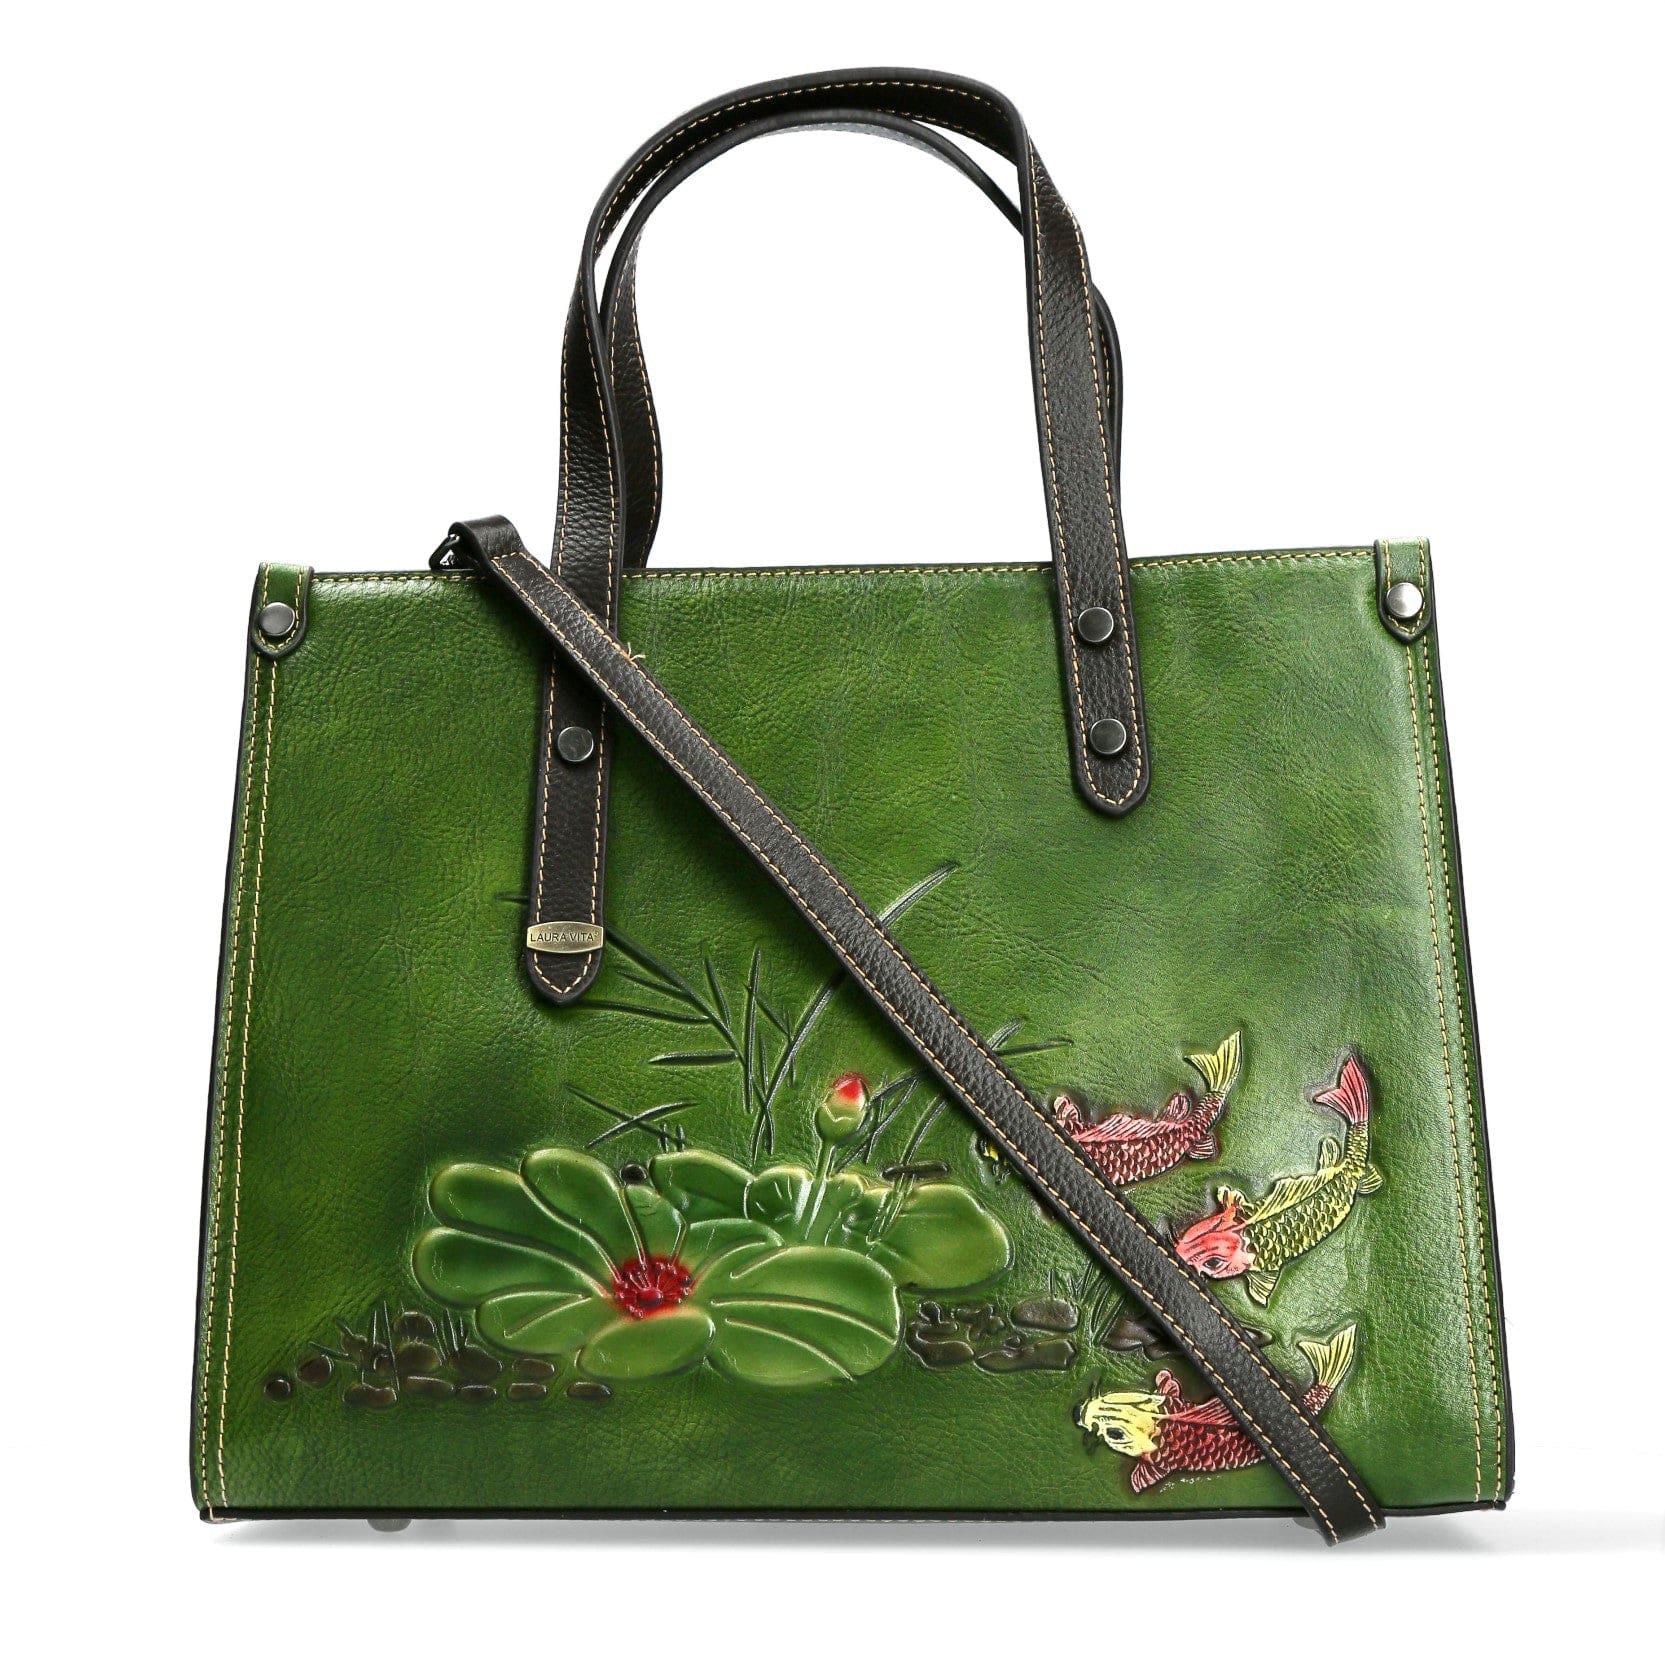 Tapcal läderväska - grön - Väska